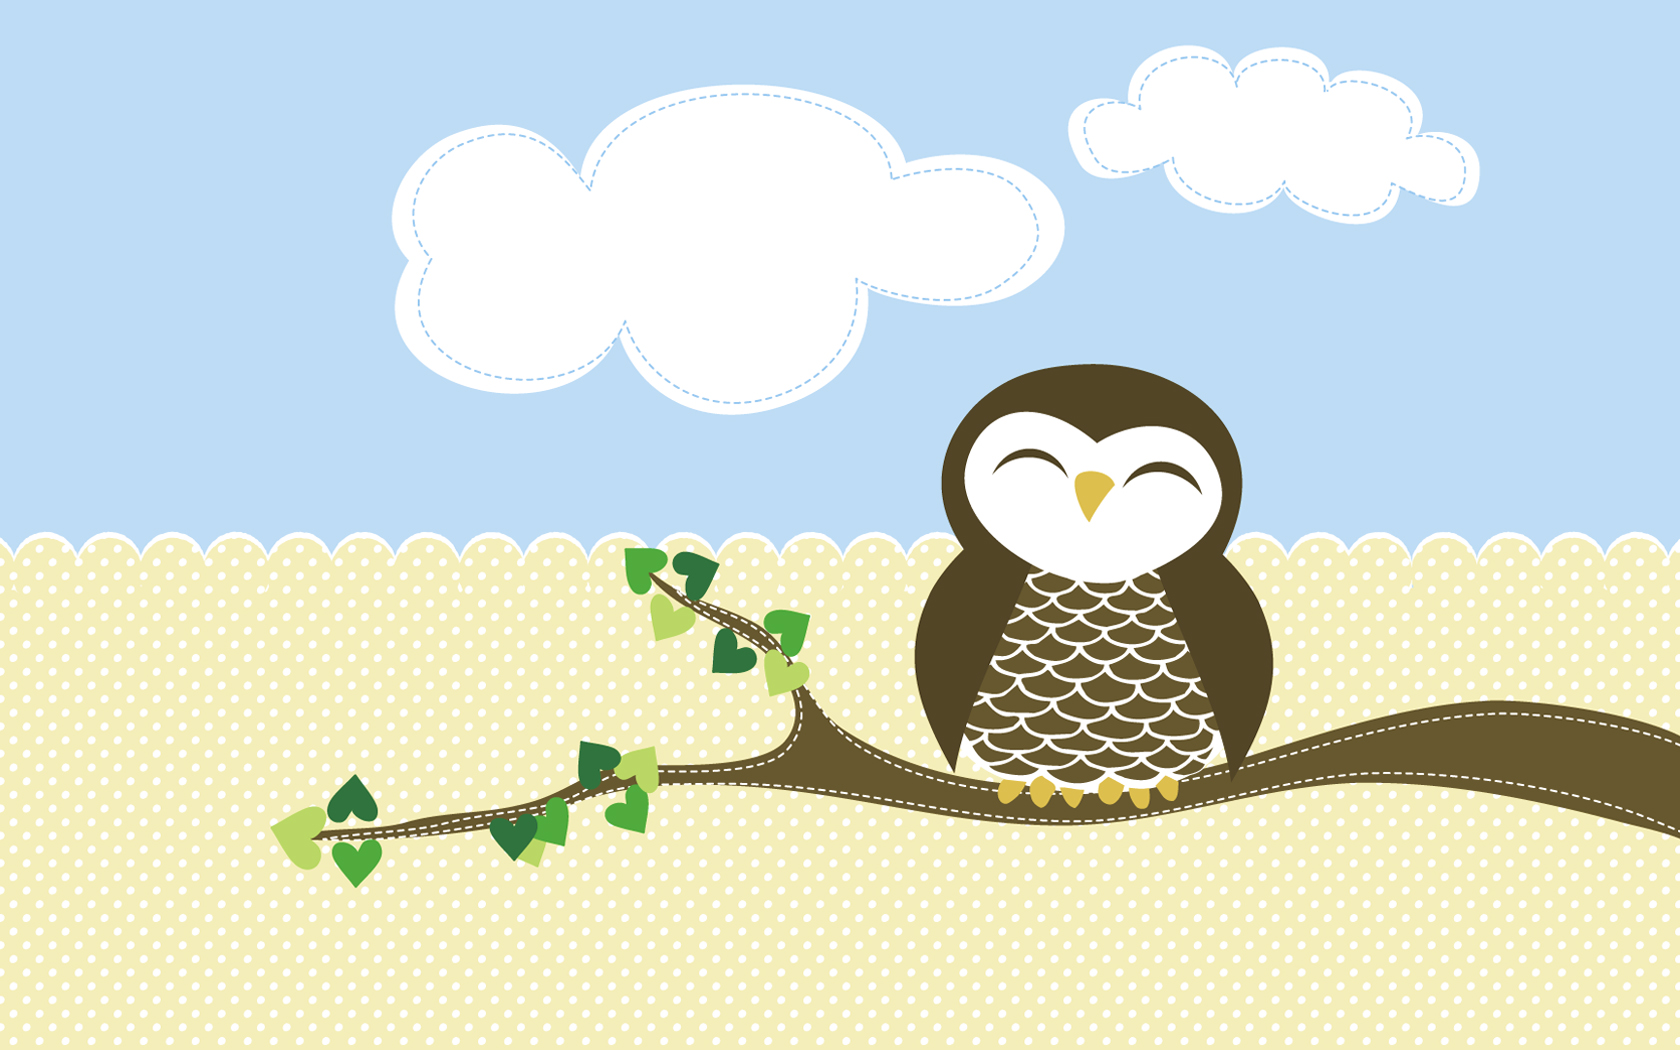 Cute Owl Wallpaper Desktop Image Amp Pictures Becuo